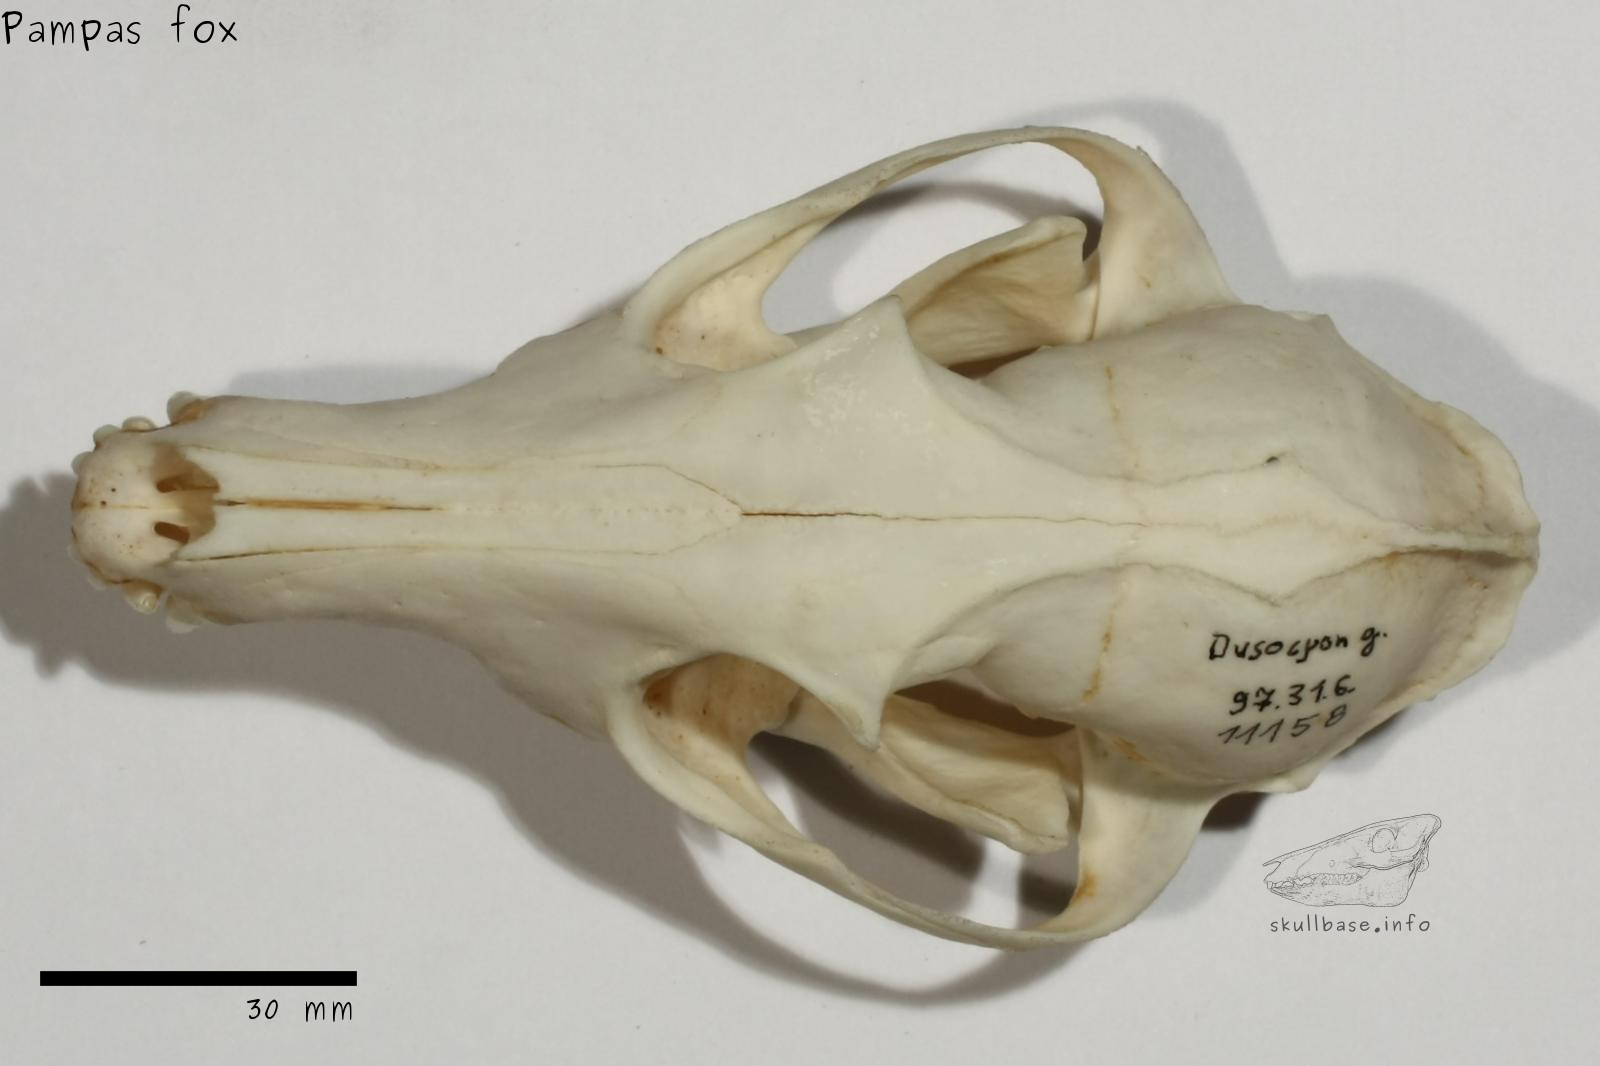 Pampas fox (Lycalopex gymnocercus) skull dorsal view